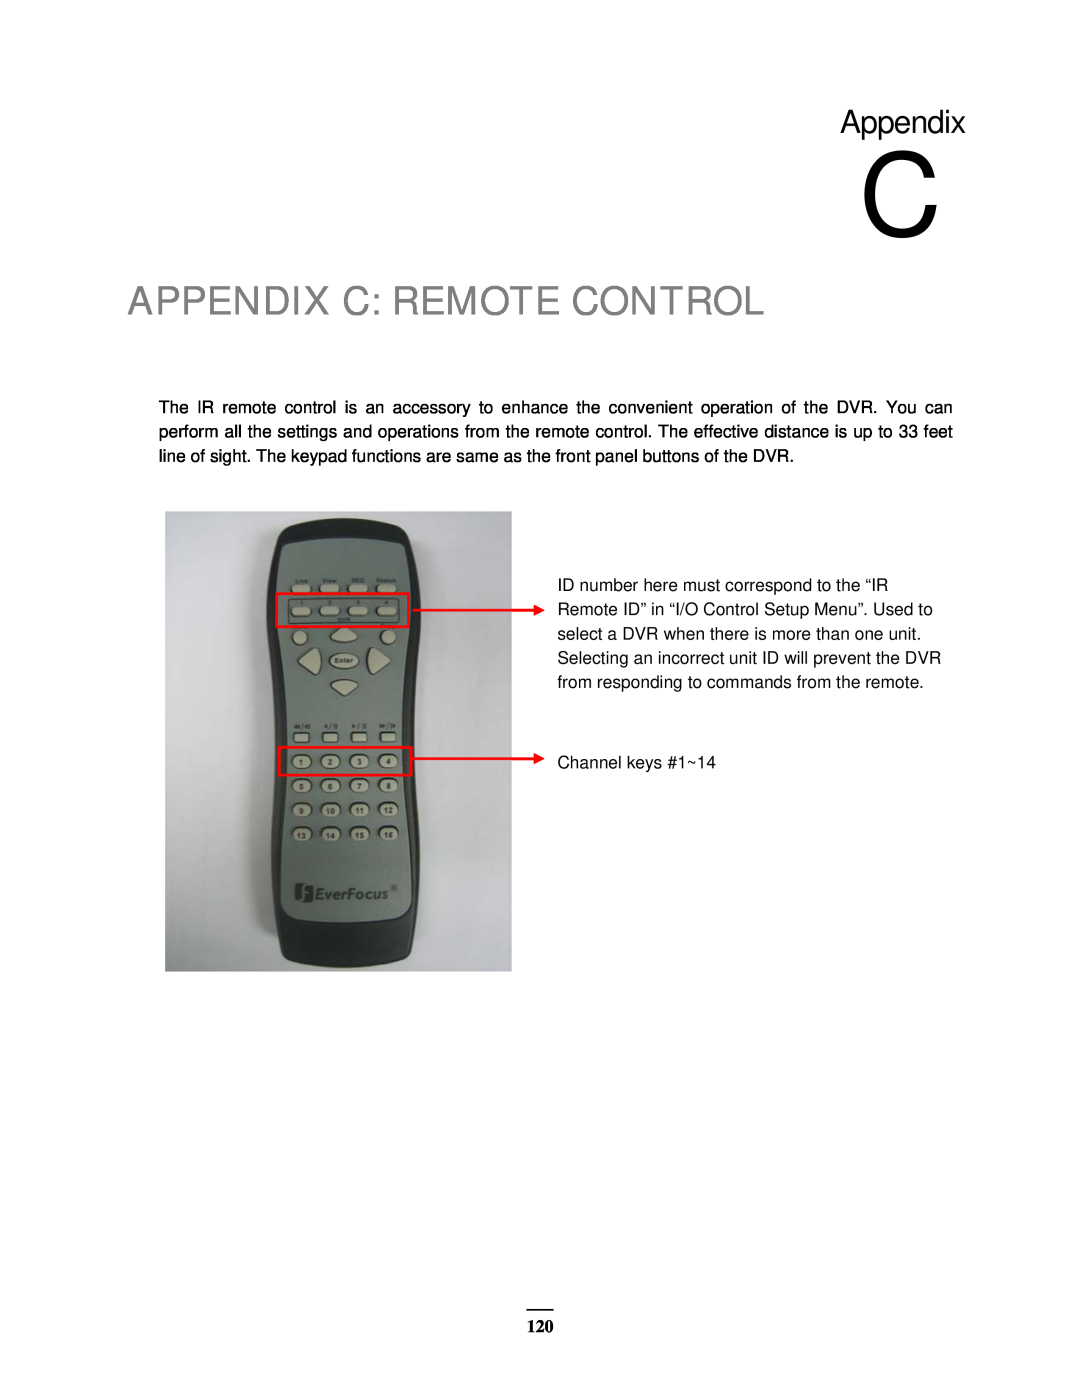 EverFocus EMV400 user manual Appendix C Remote Control 